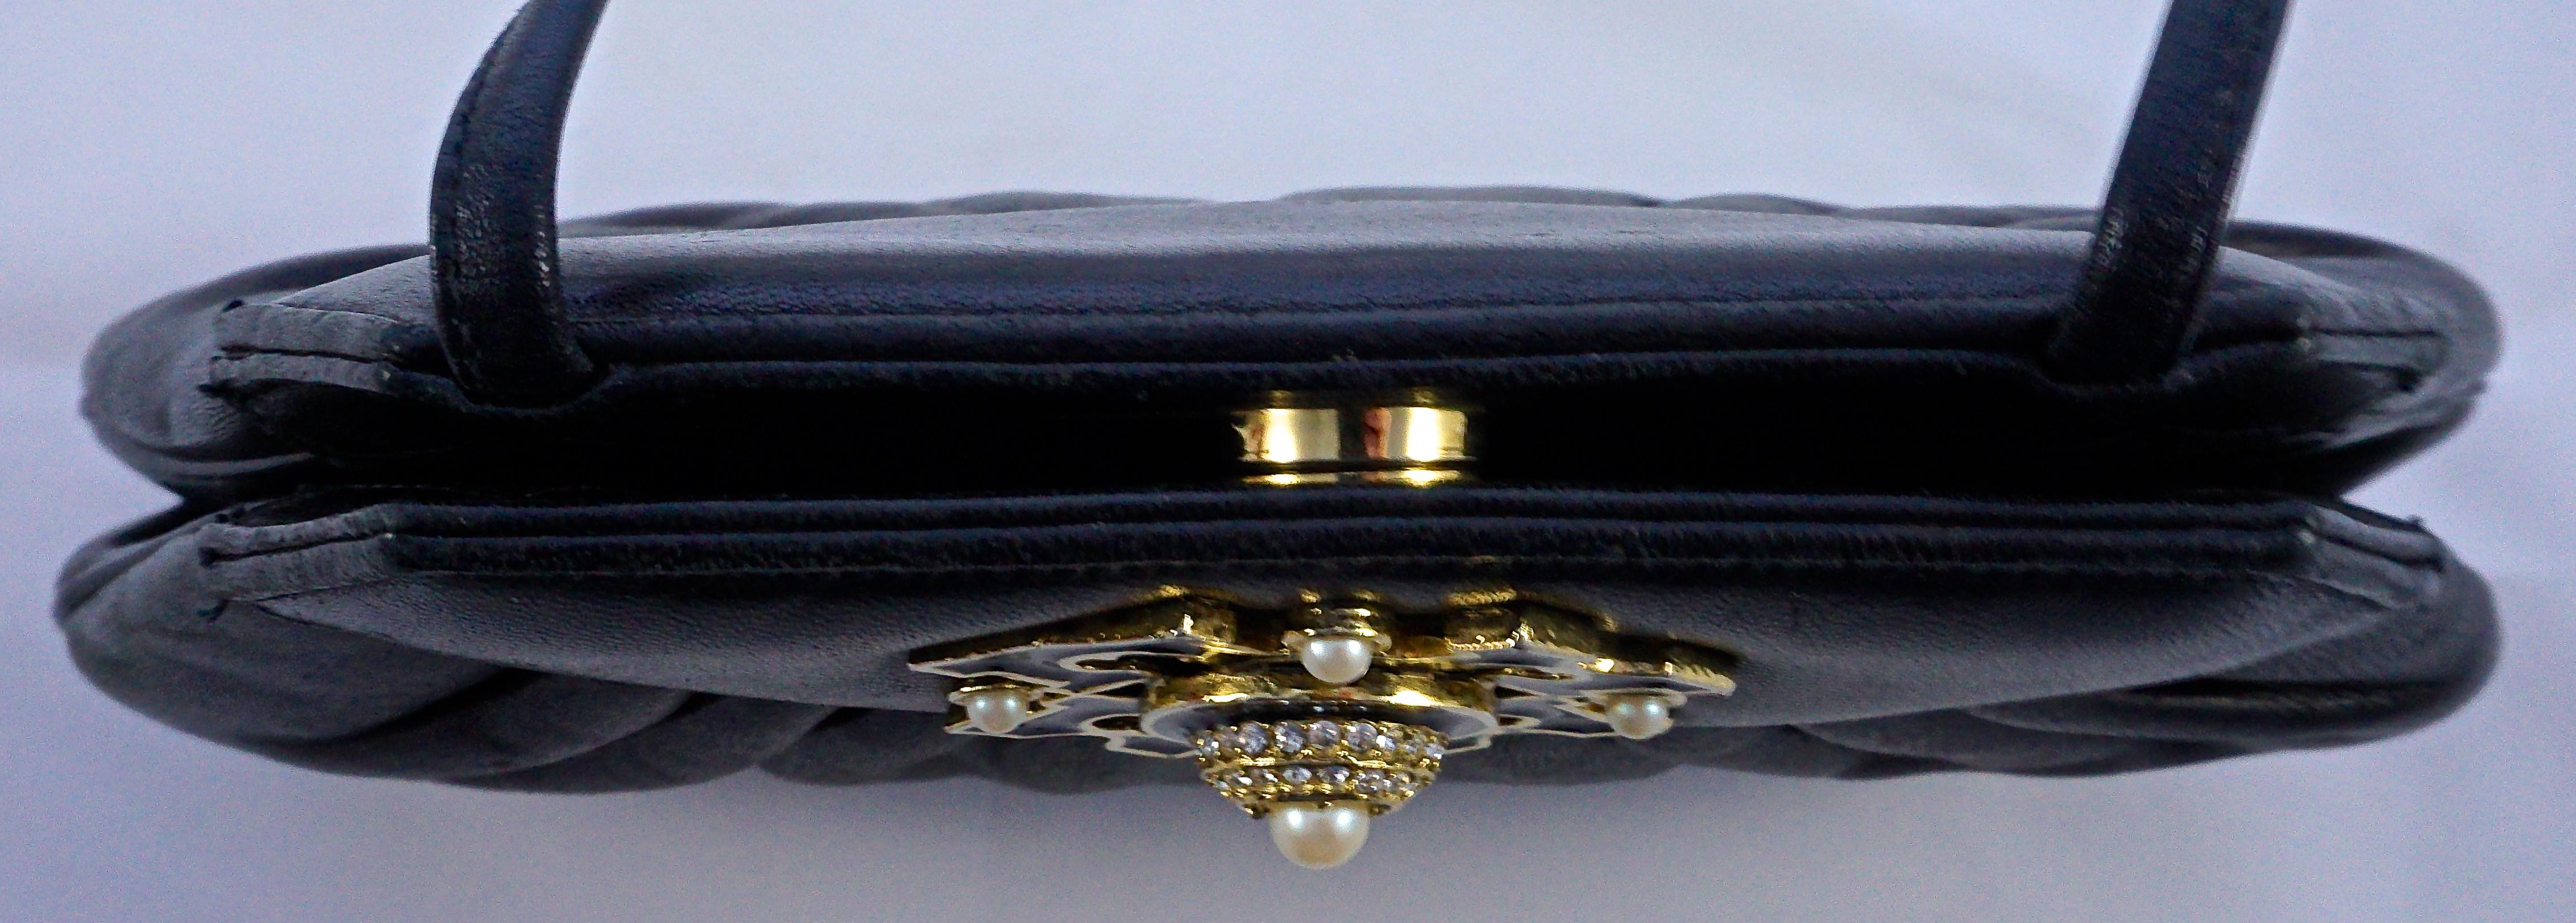 Susan Gail Black Leather Shoulder Bag with Rhinestones Faux Pearls and Enamel  1